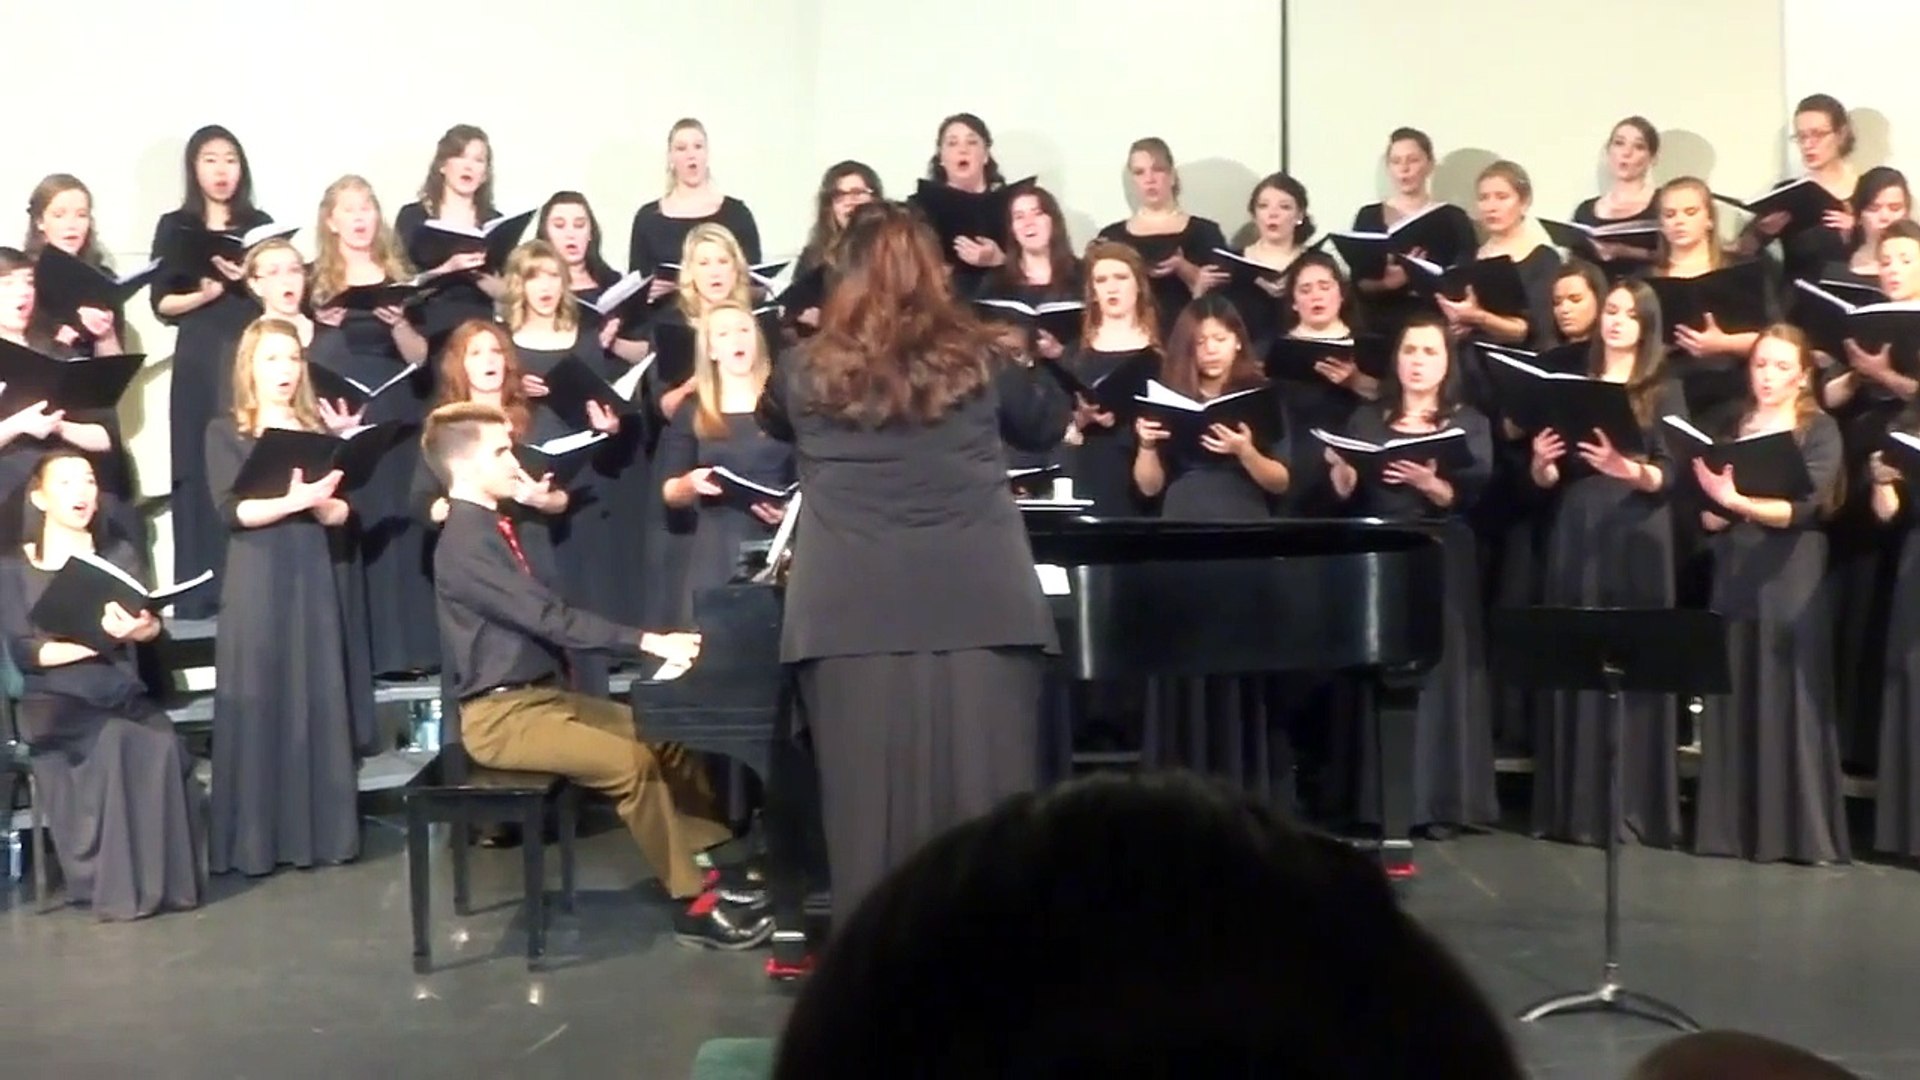 UVU Women's Choir sings